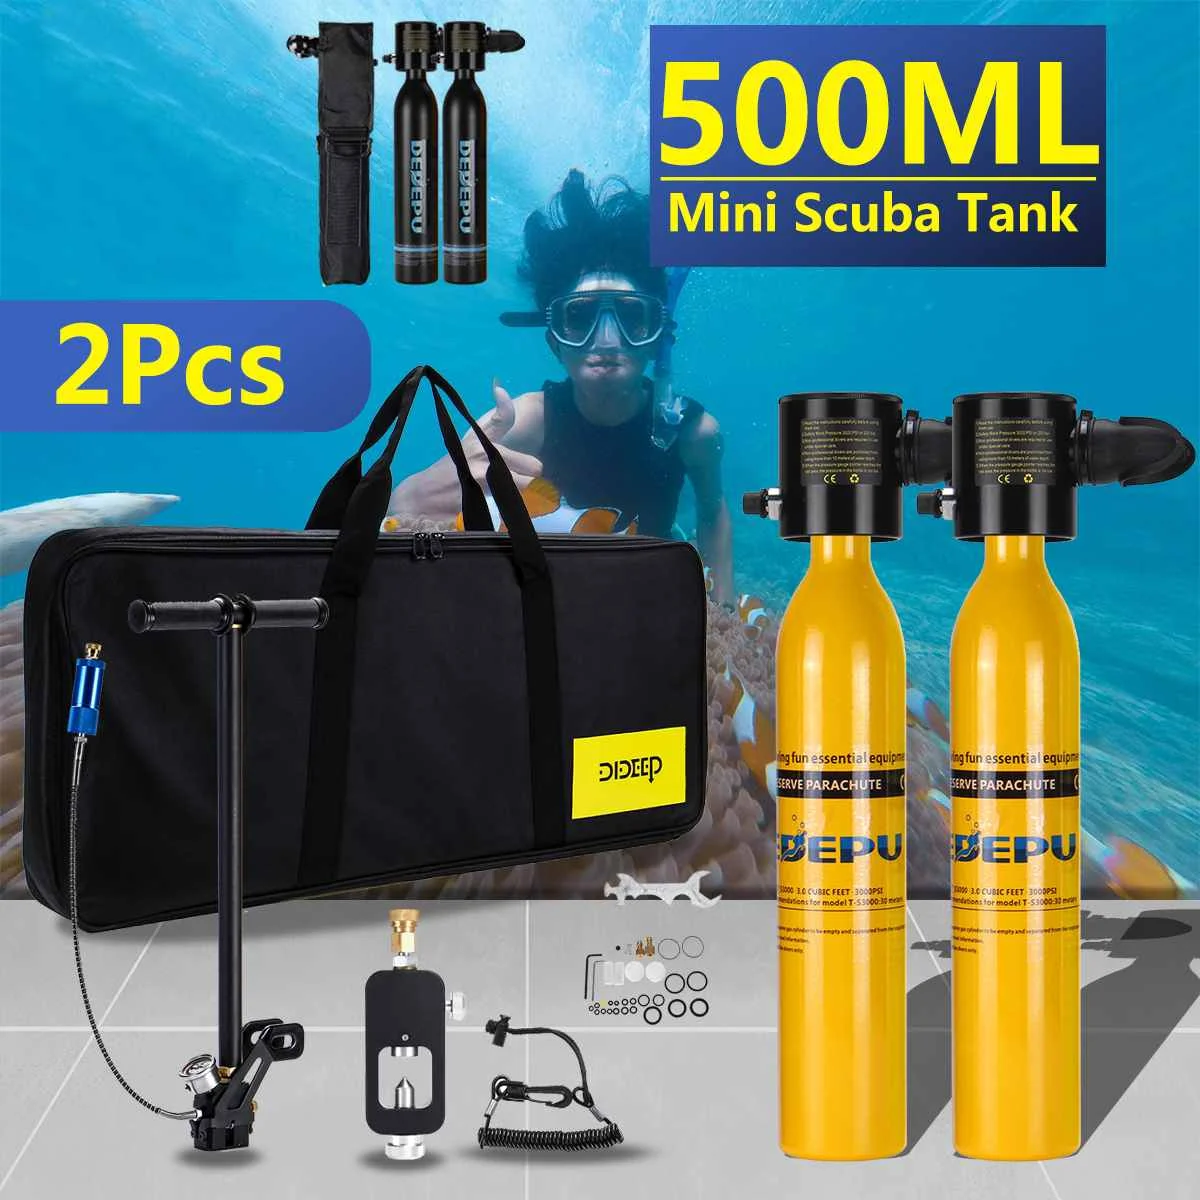 

DIDEEP 2PCS 500ML Scuba Diving Tank Mini Oxygen Cylinder Set Hand Pump Underwater Snorkeling Diving Equipment Pump Tool Set